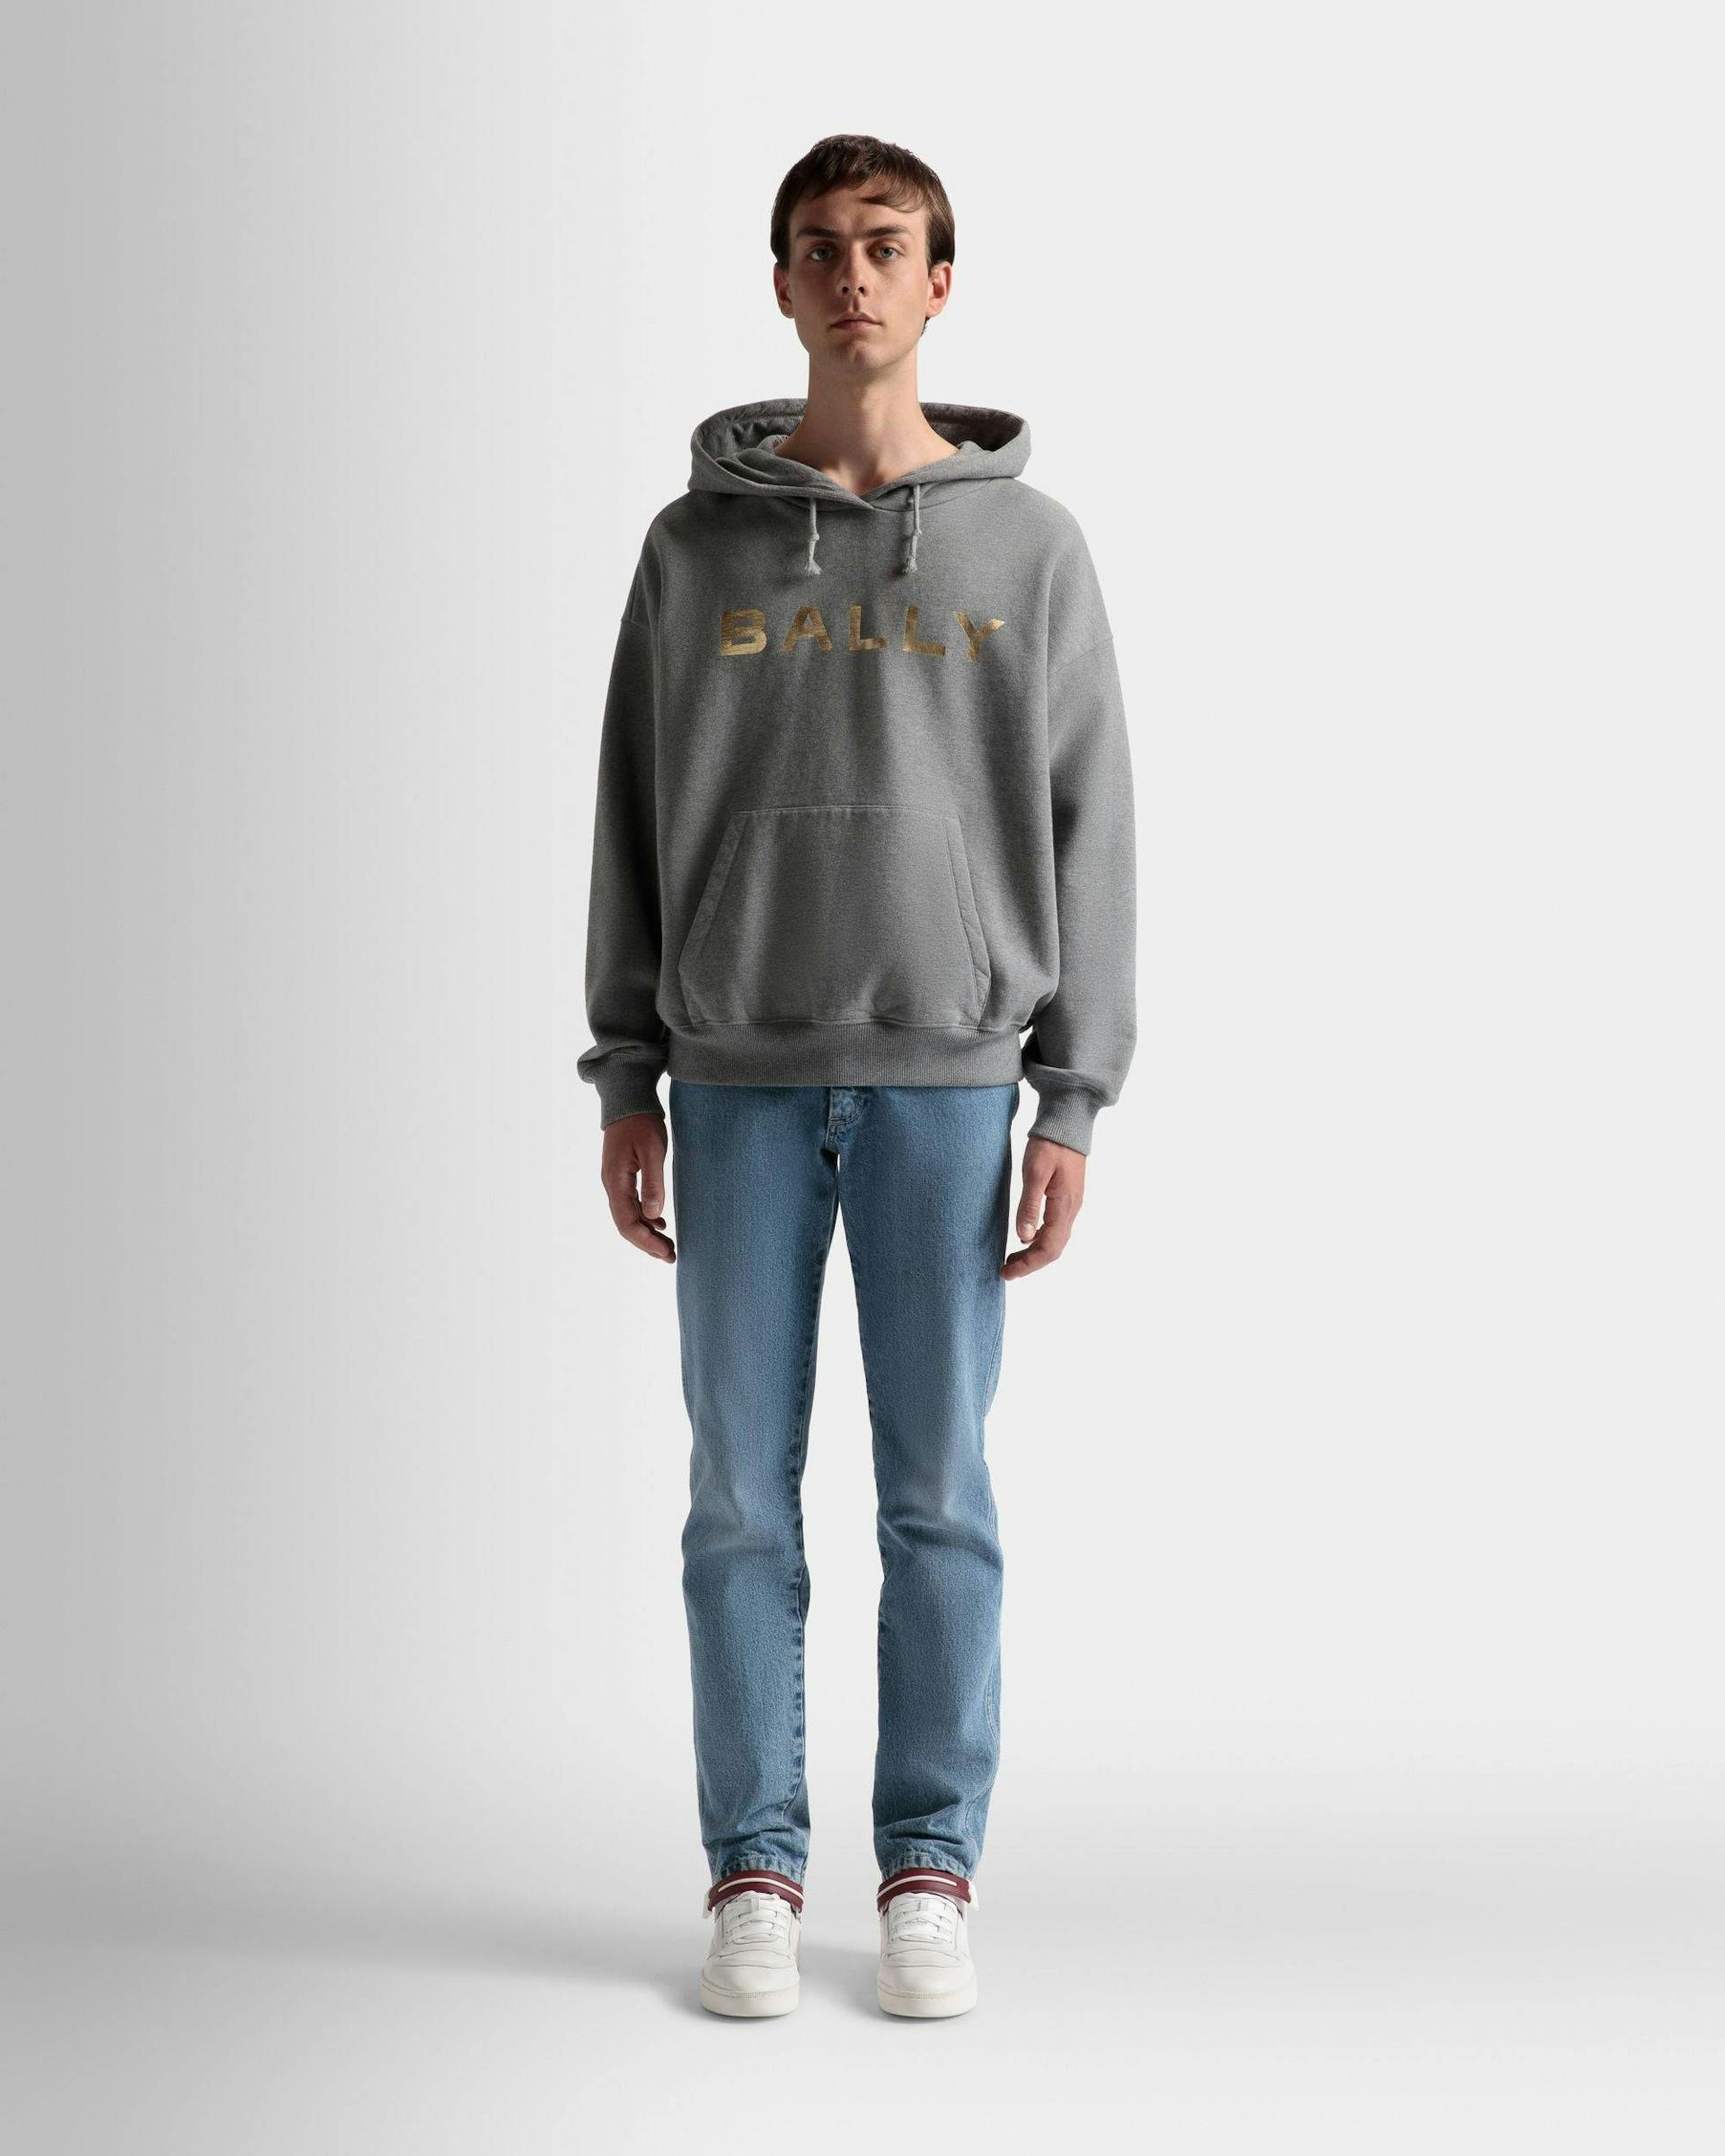 Men's Logo Hooded Sweatshirt In Grey Melange Cotton | Bally | On Model Front